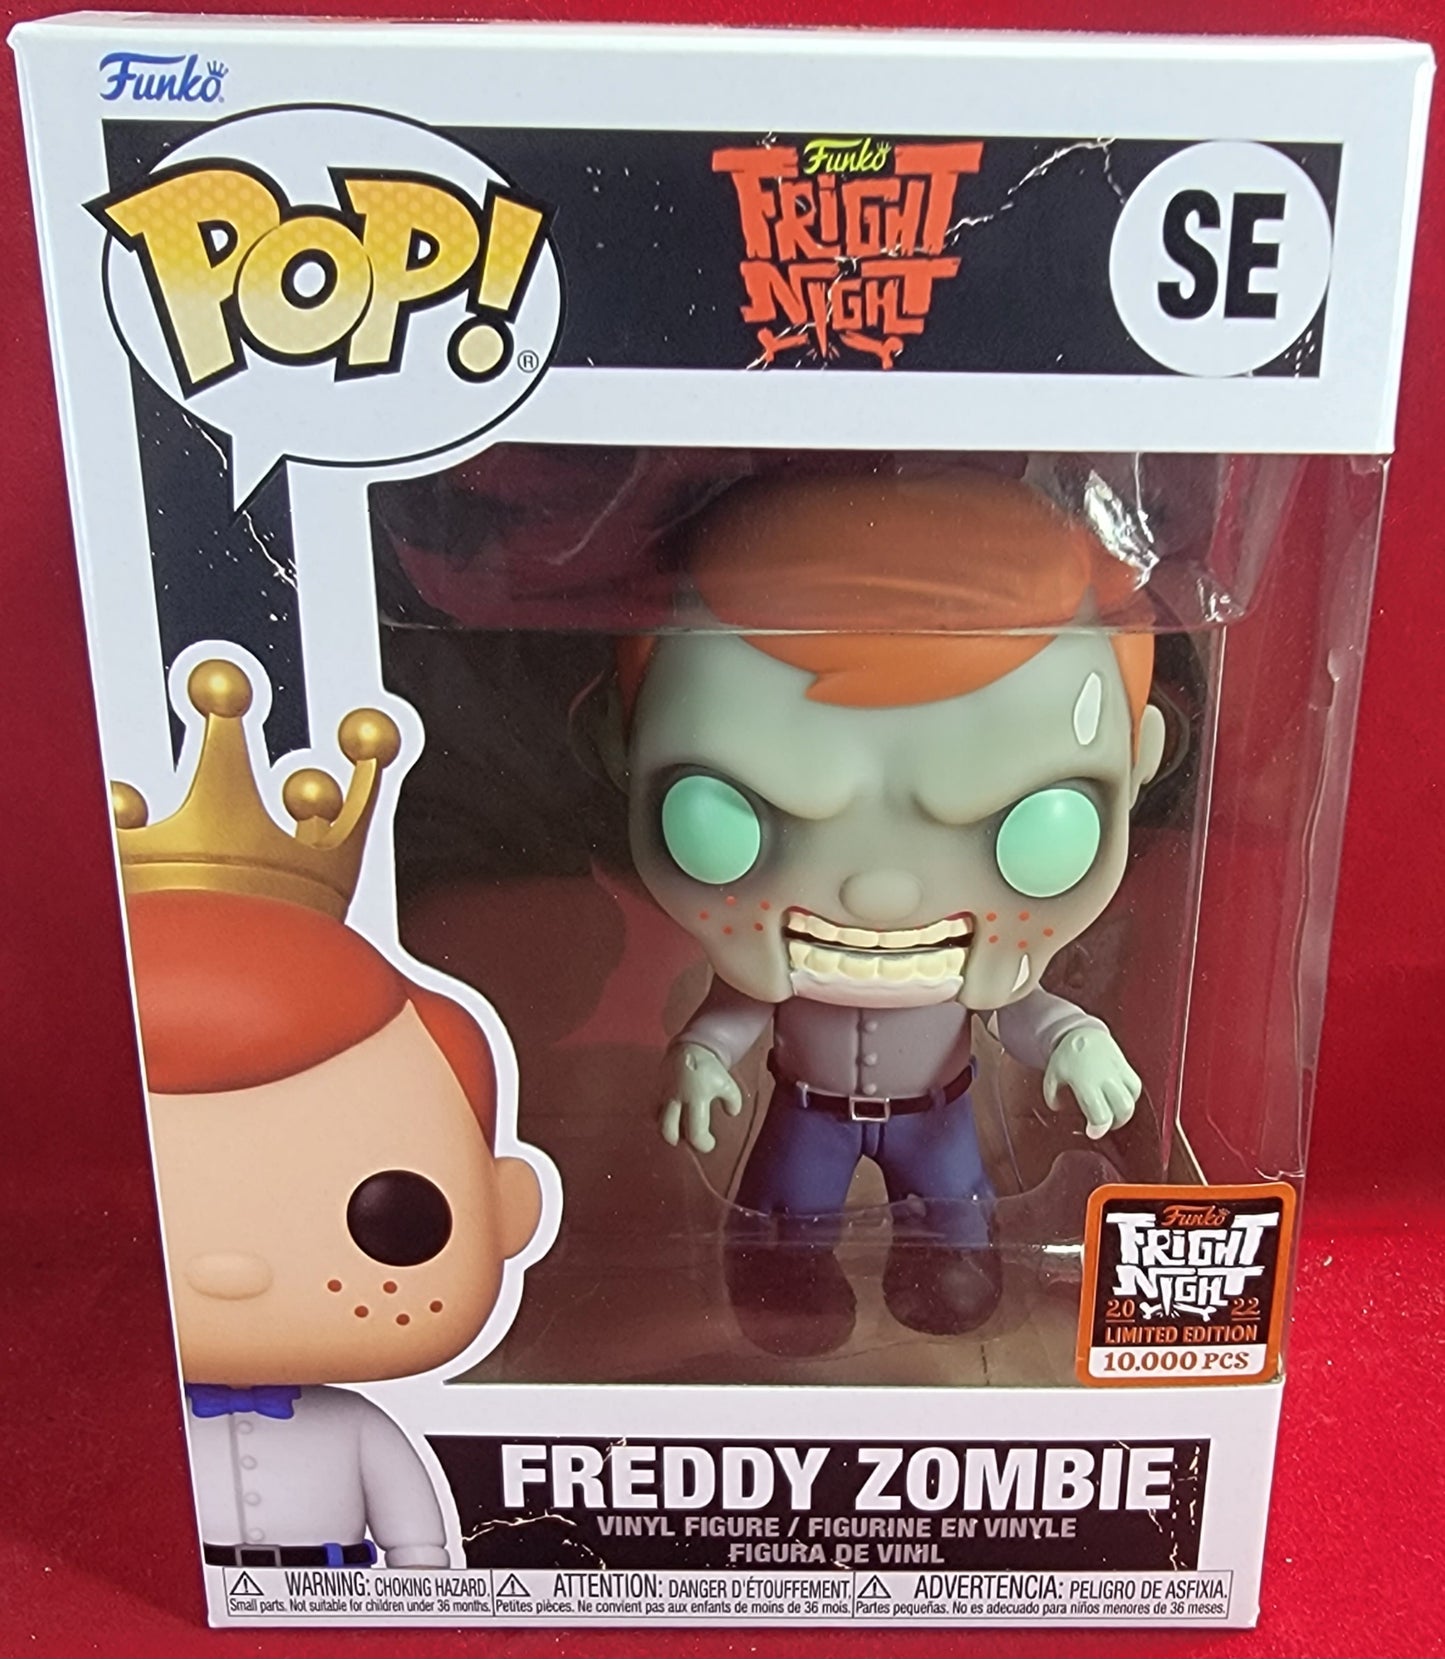 Freddy zombie fright night exclusive 2022 funko # se (nib)